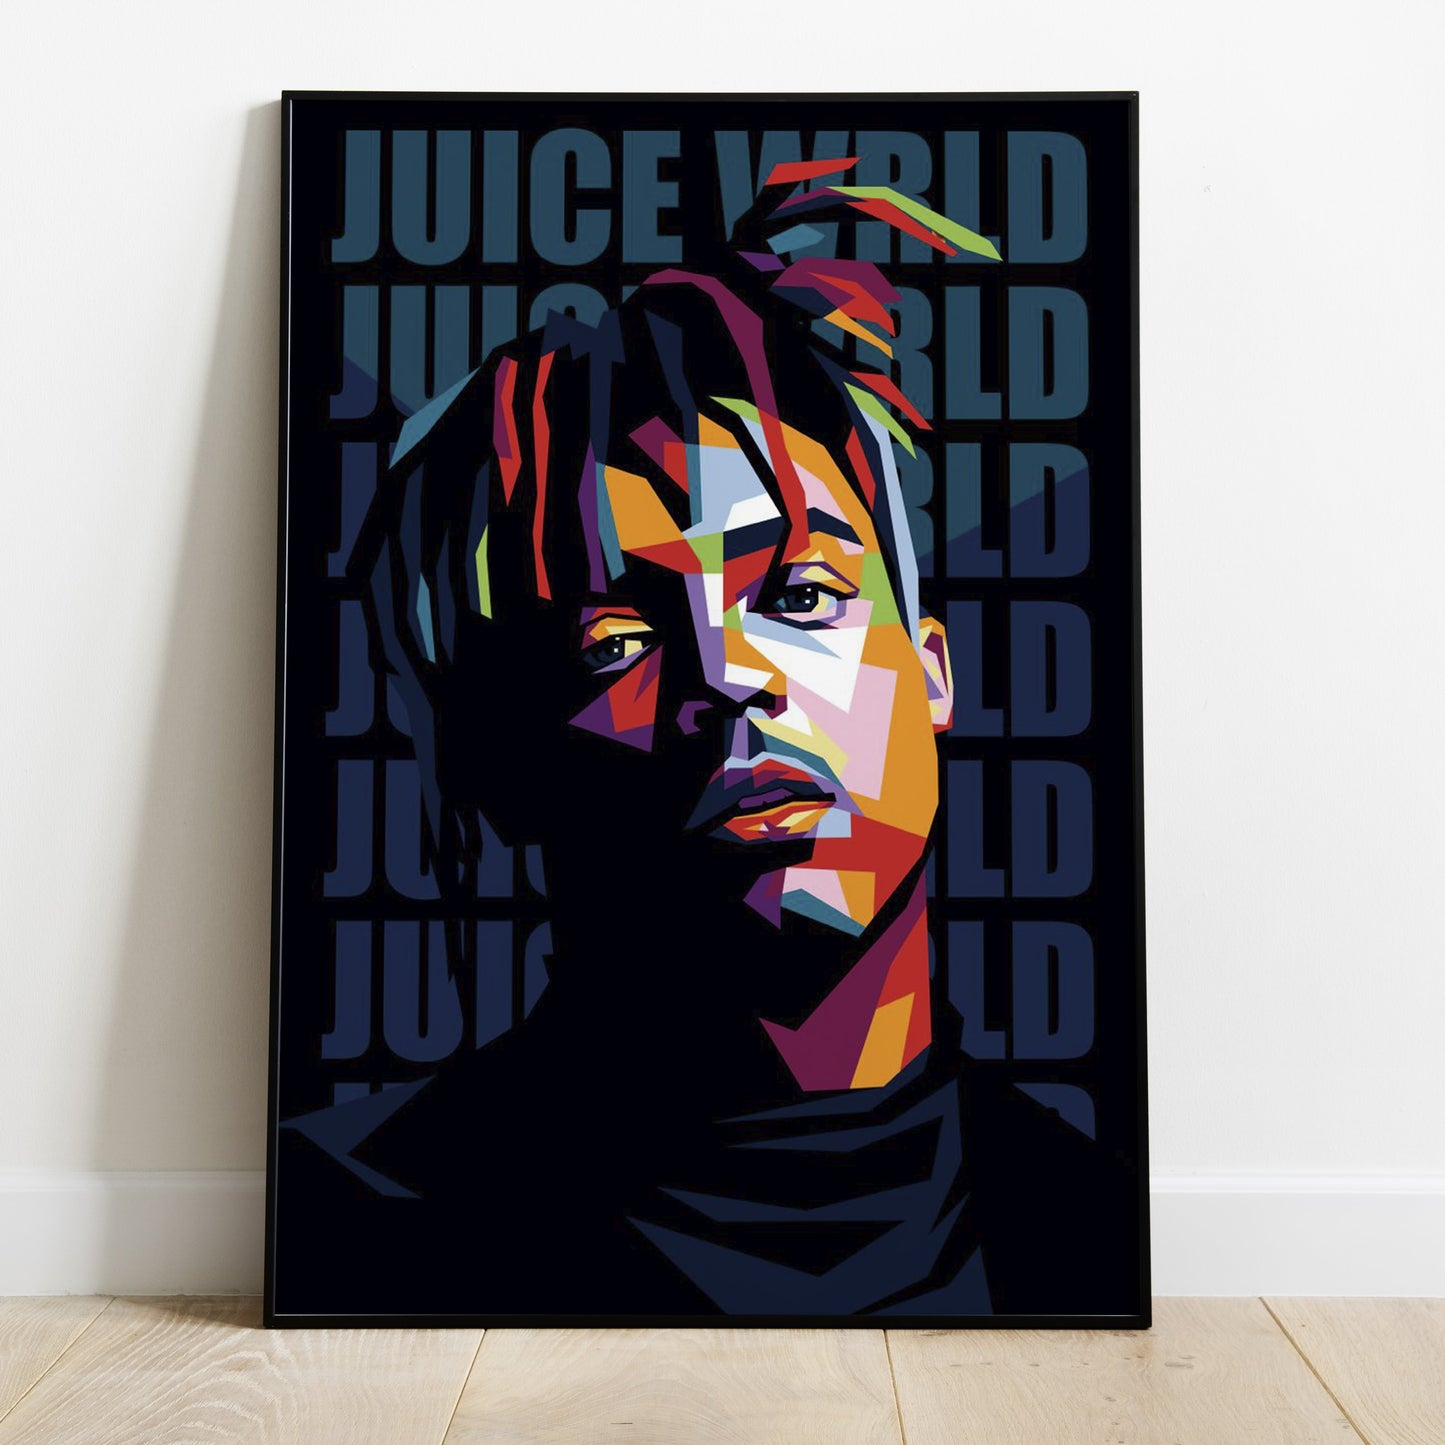 Juice WRLD Tribute Poster - A Visual Homage